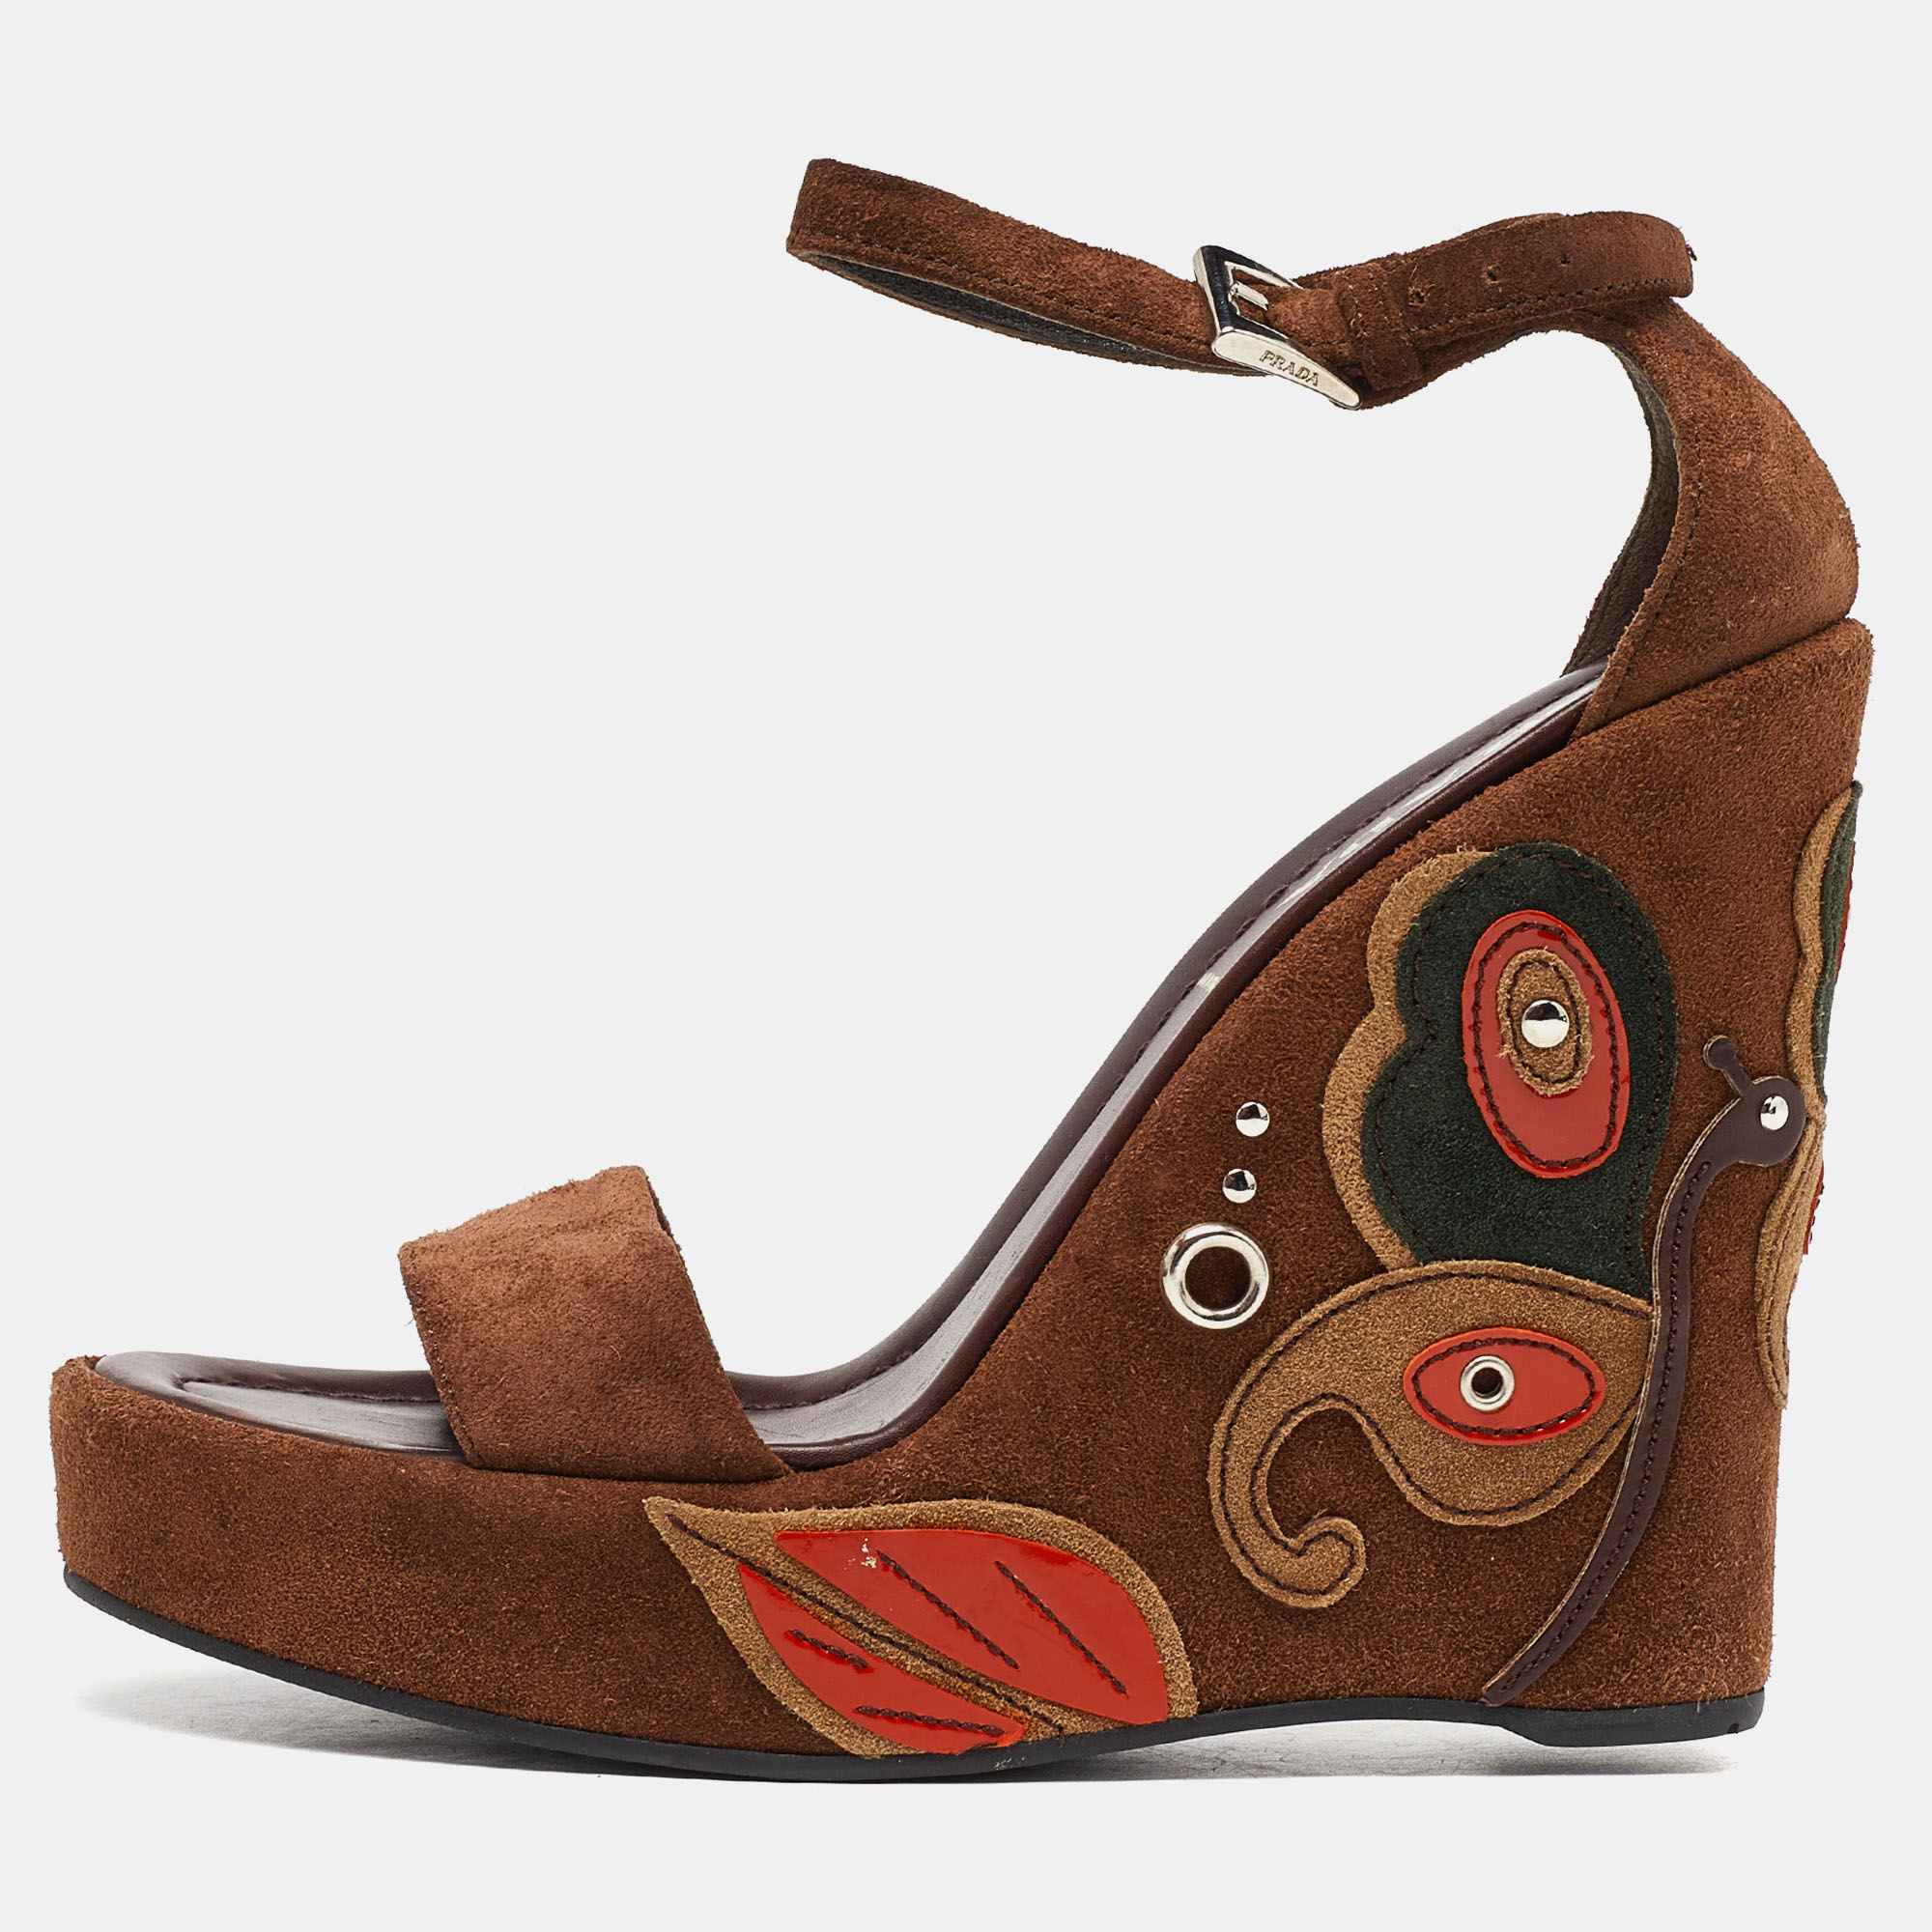 Prada brown suede wedge platform ankle strap sandals size 36.5